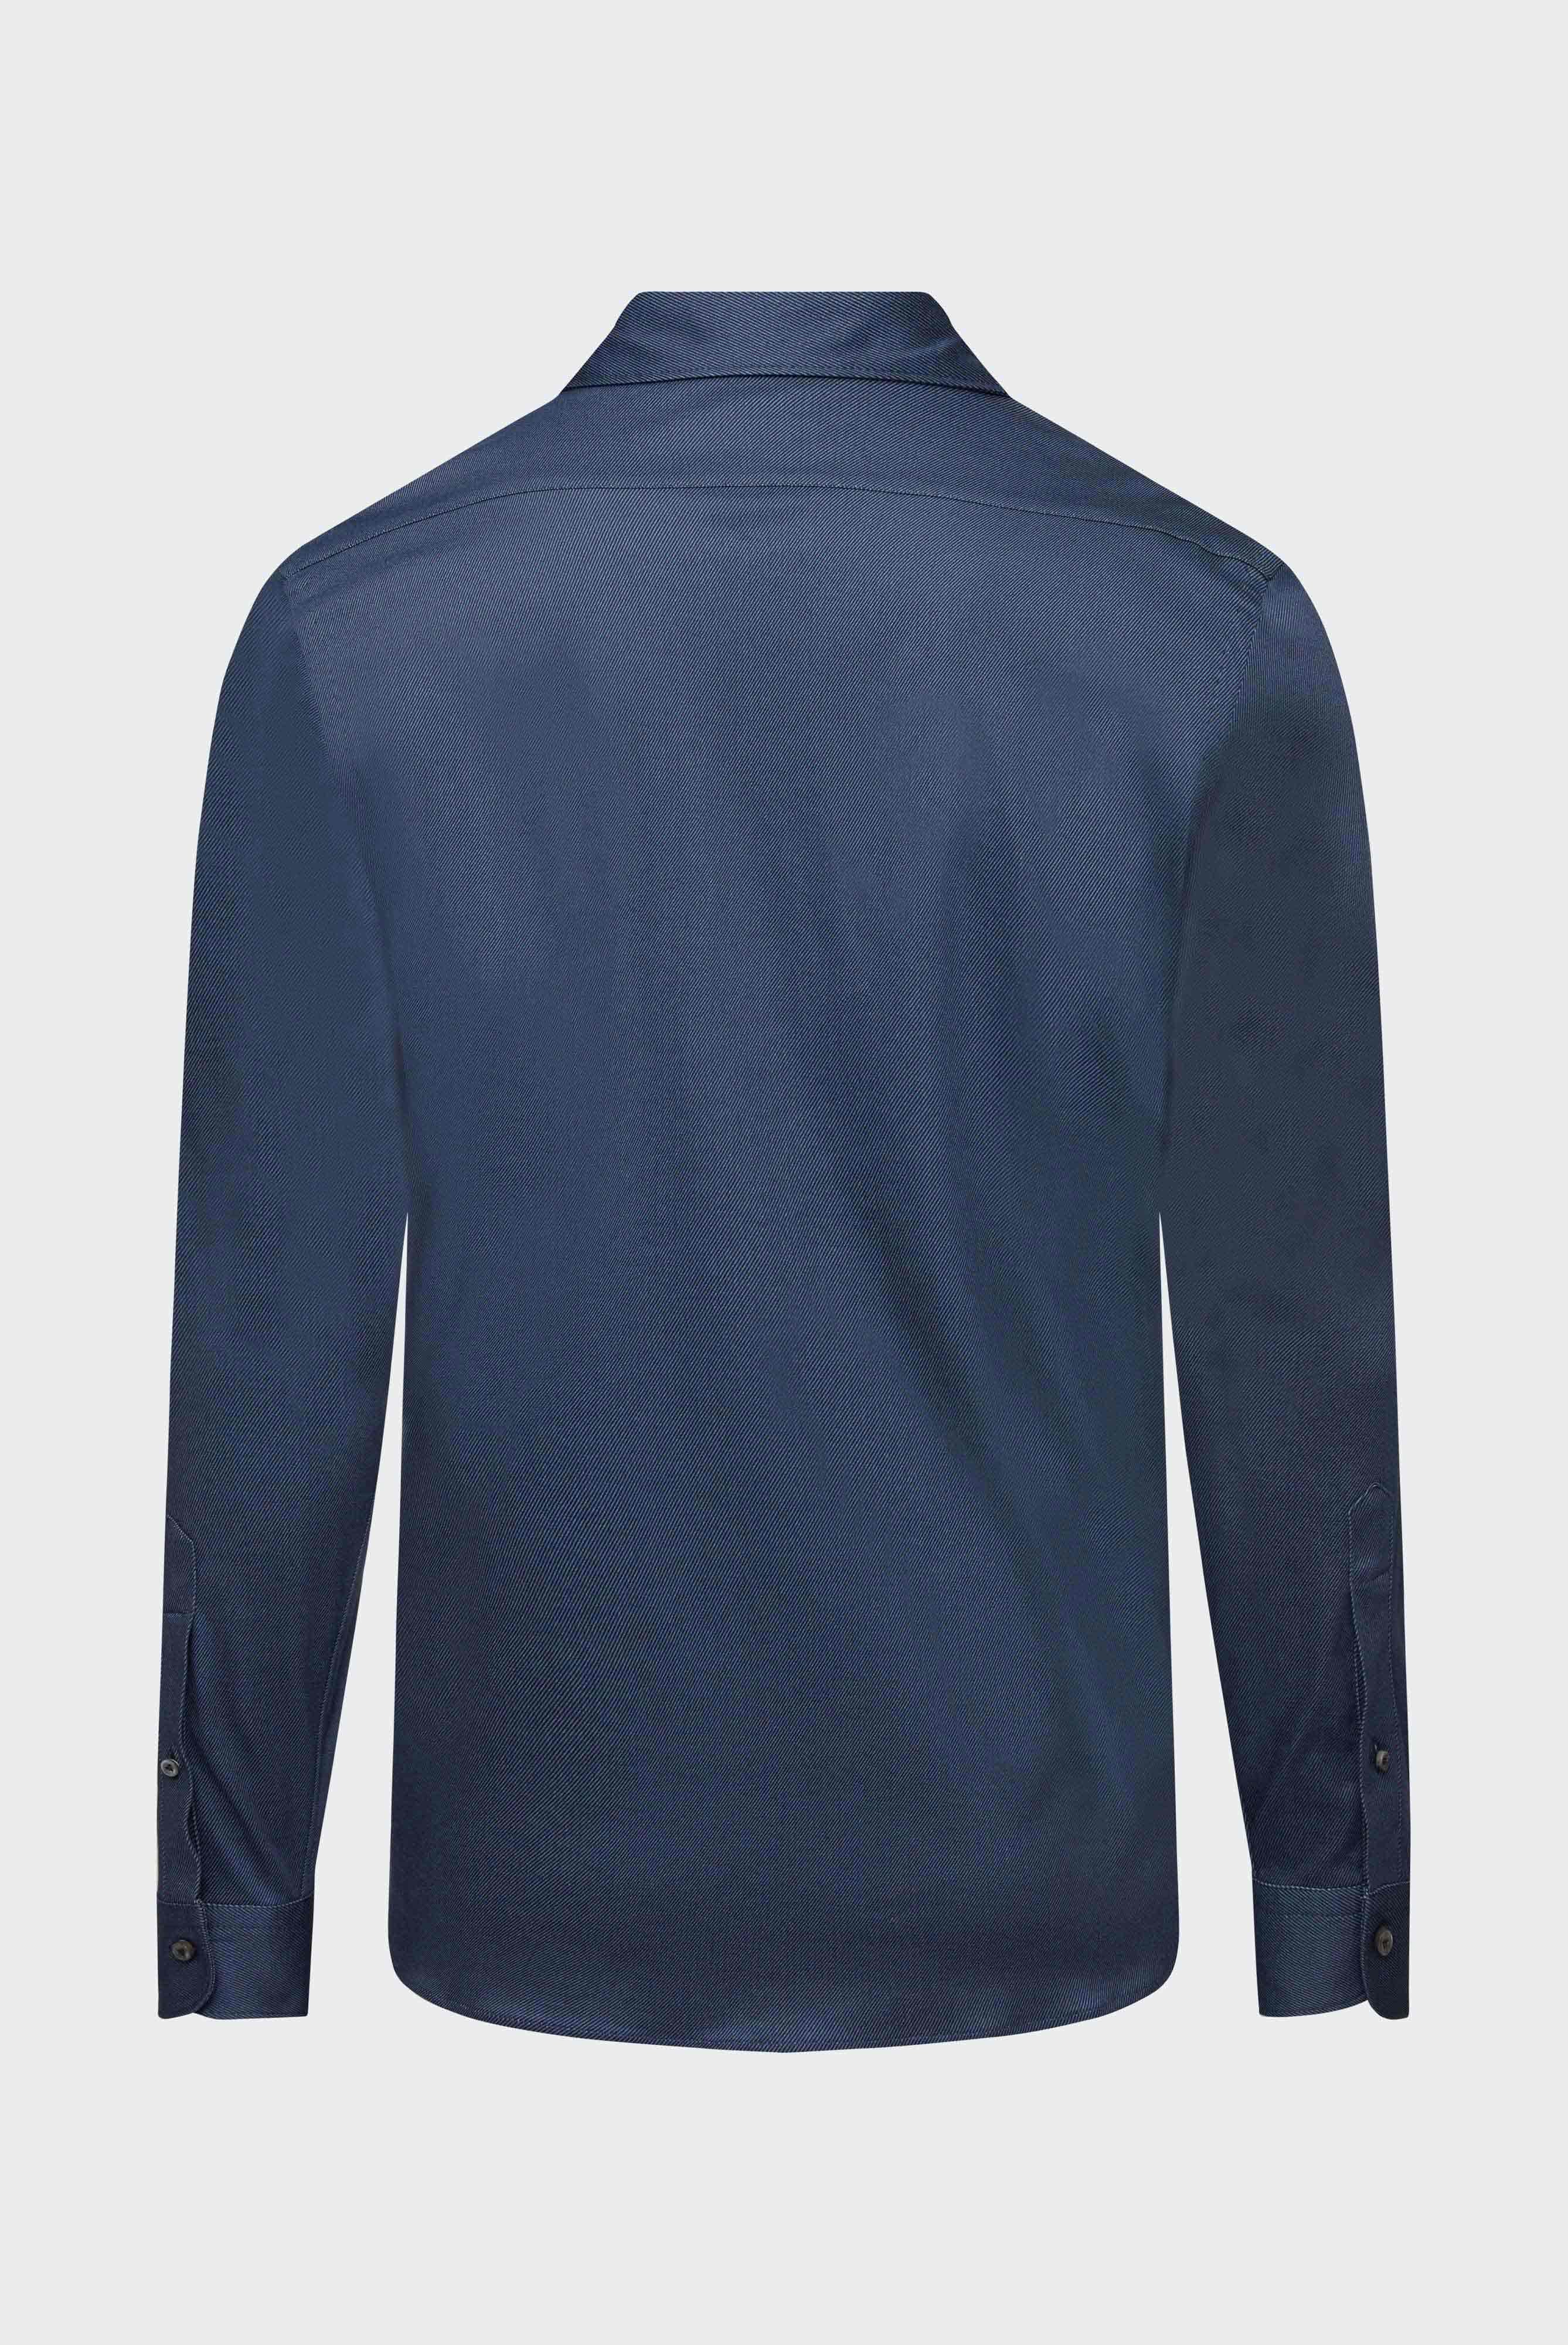 Casual Hemden+Jersey Hemd mit Twill Druck Tailor Fit+20.1683.UC.187749.782.XL